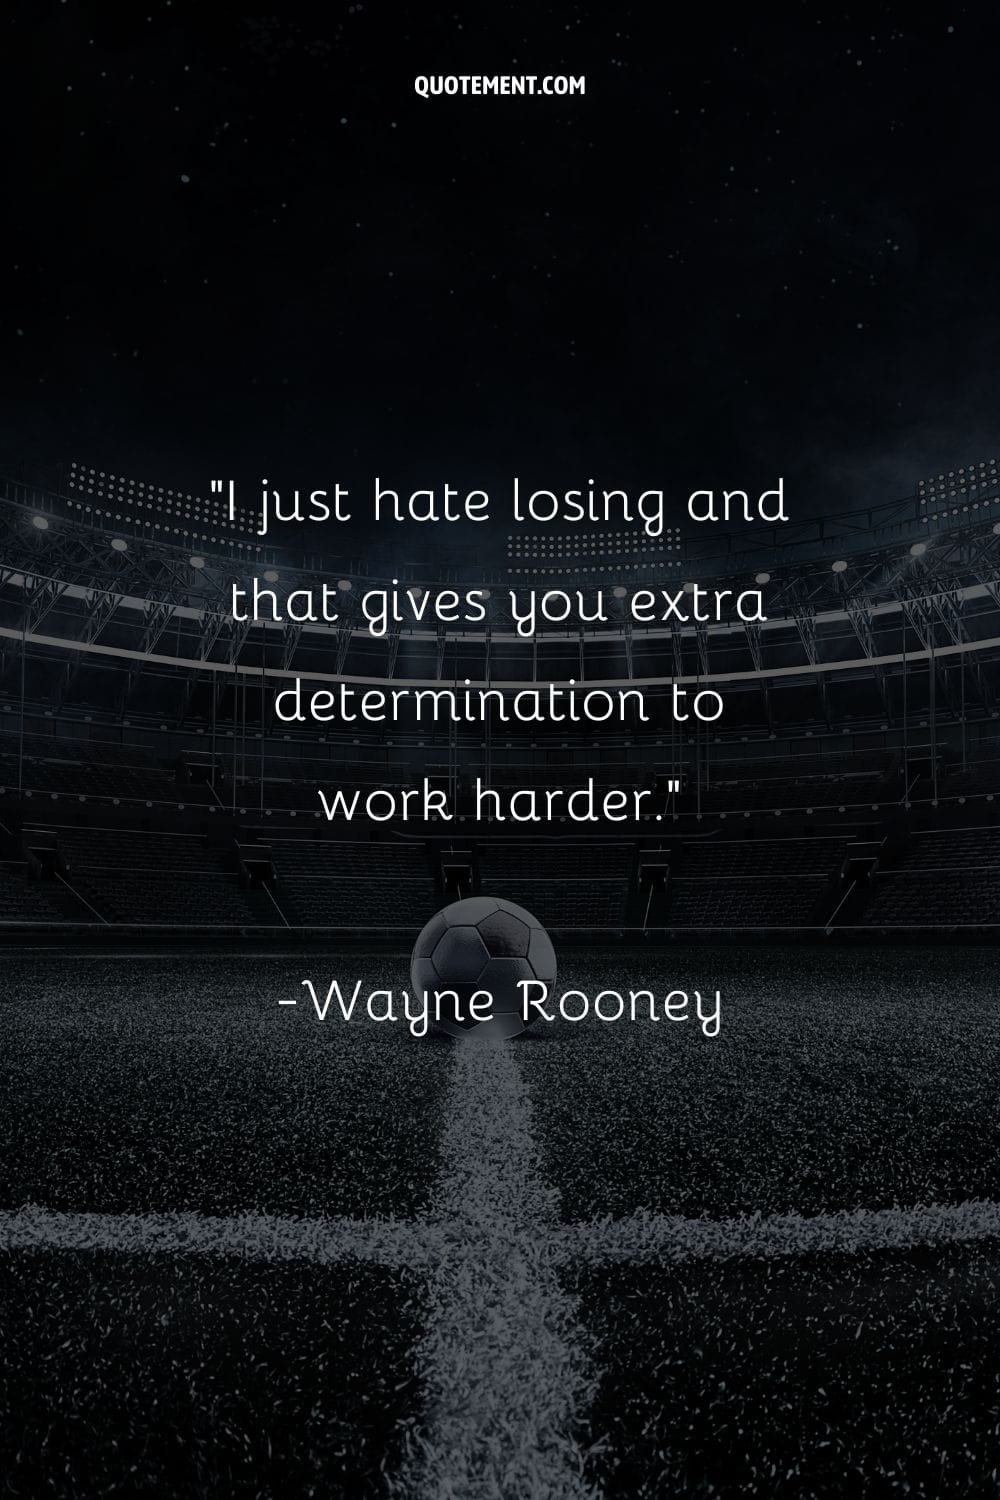 motivational soccer quote represented by illuminated stadium